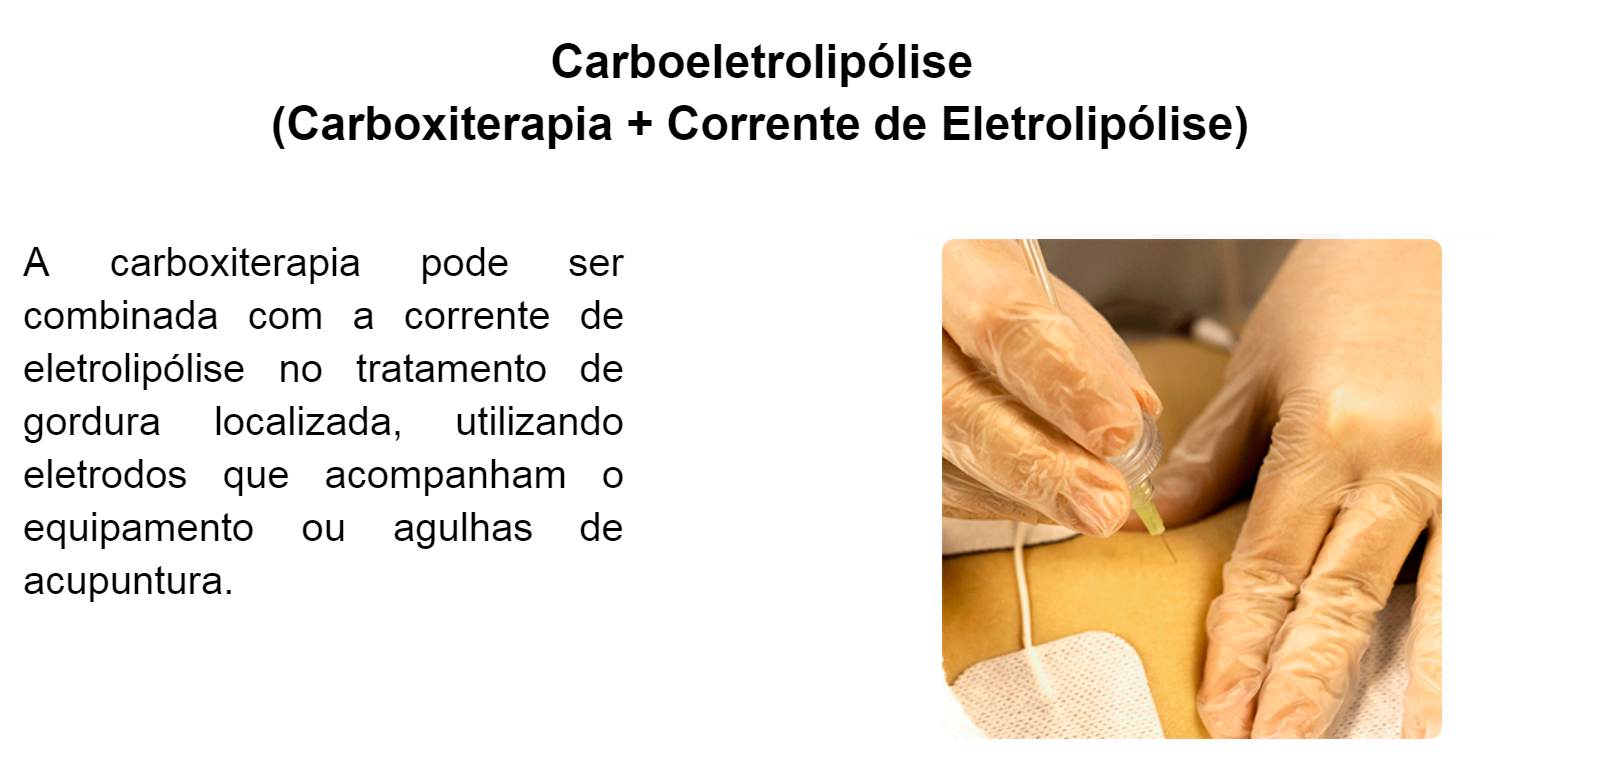 Carboeletrolipólise